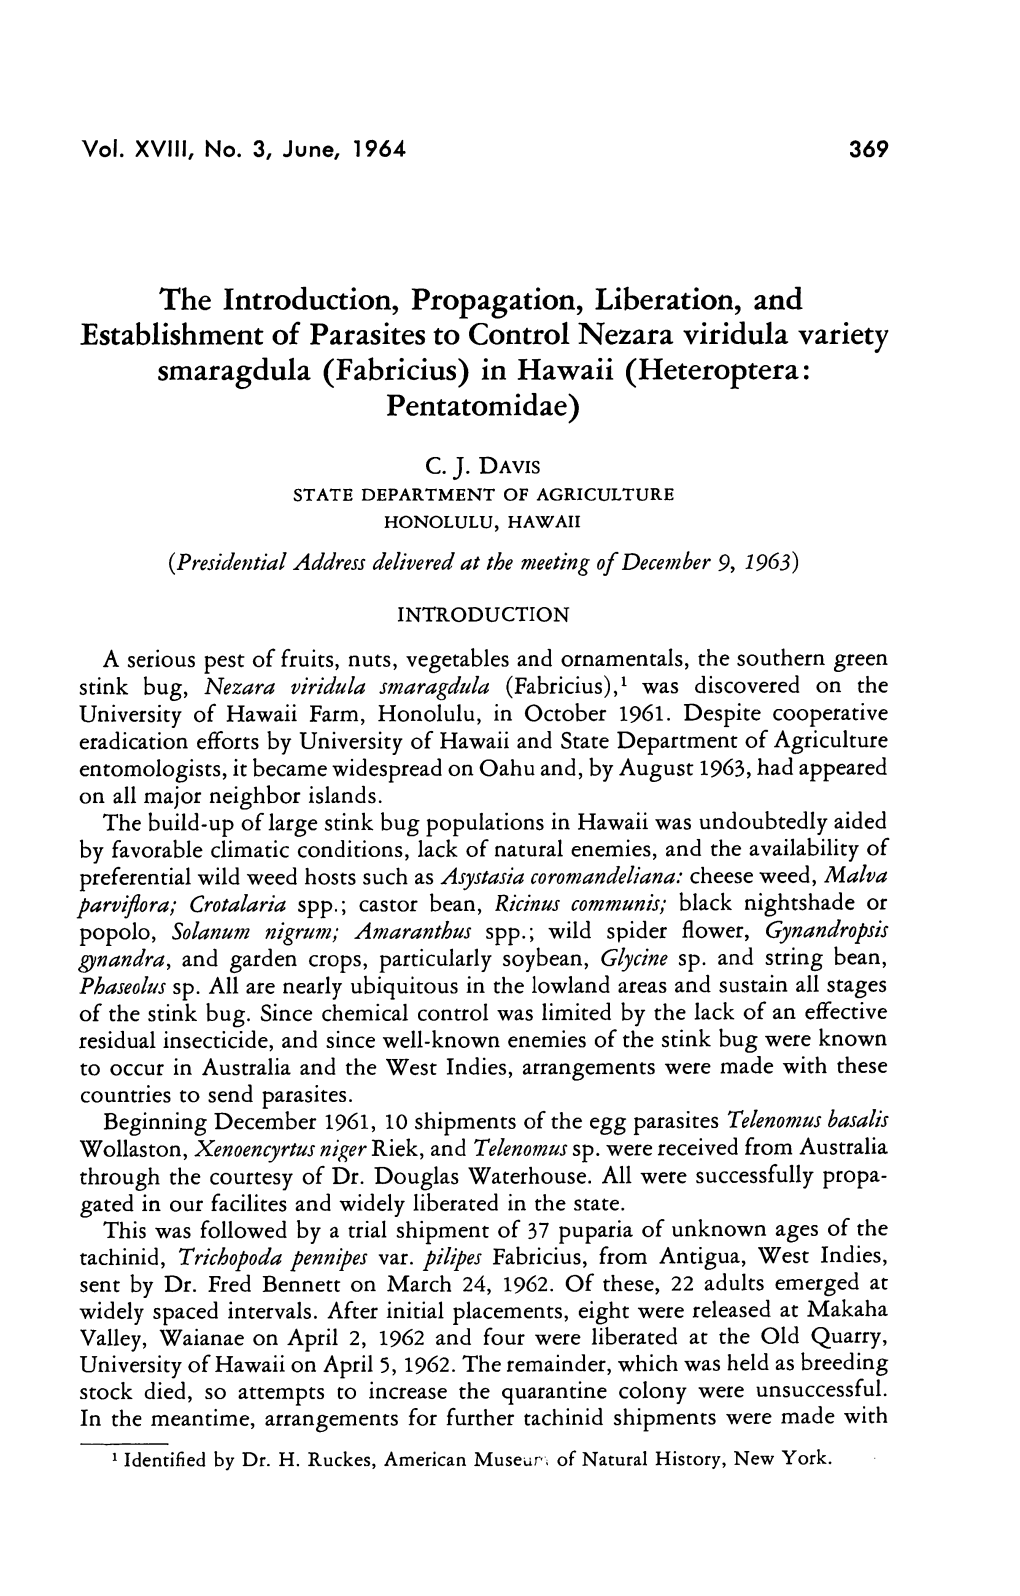 Establishment of Parasites to Control Ne2ara Viridula Variety Smaragdula (Fabricius) in Hawaii (Heteroptera: Pentatomidae)